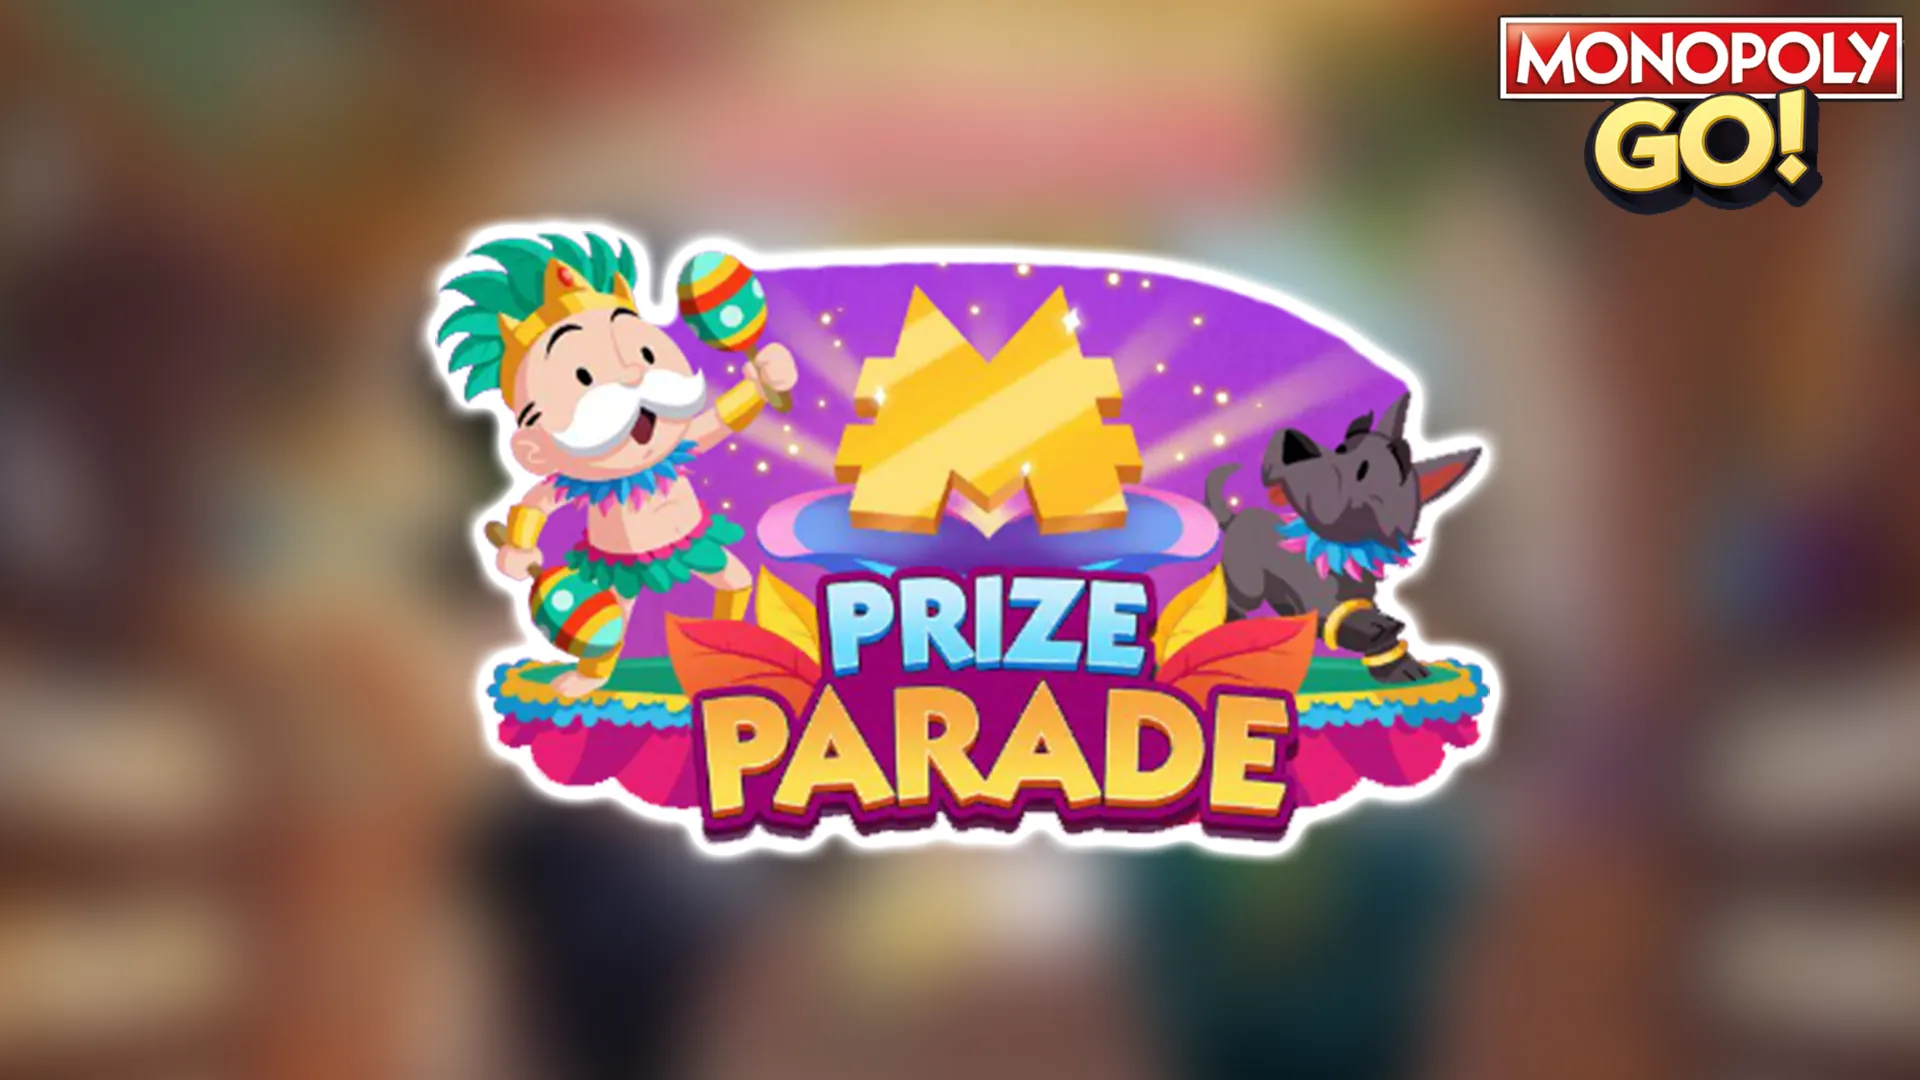 Monopoly GO All Prize Parade Rewards and Milestones